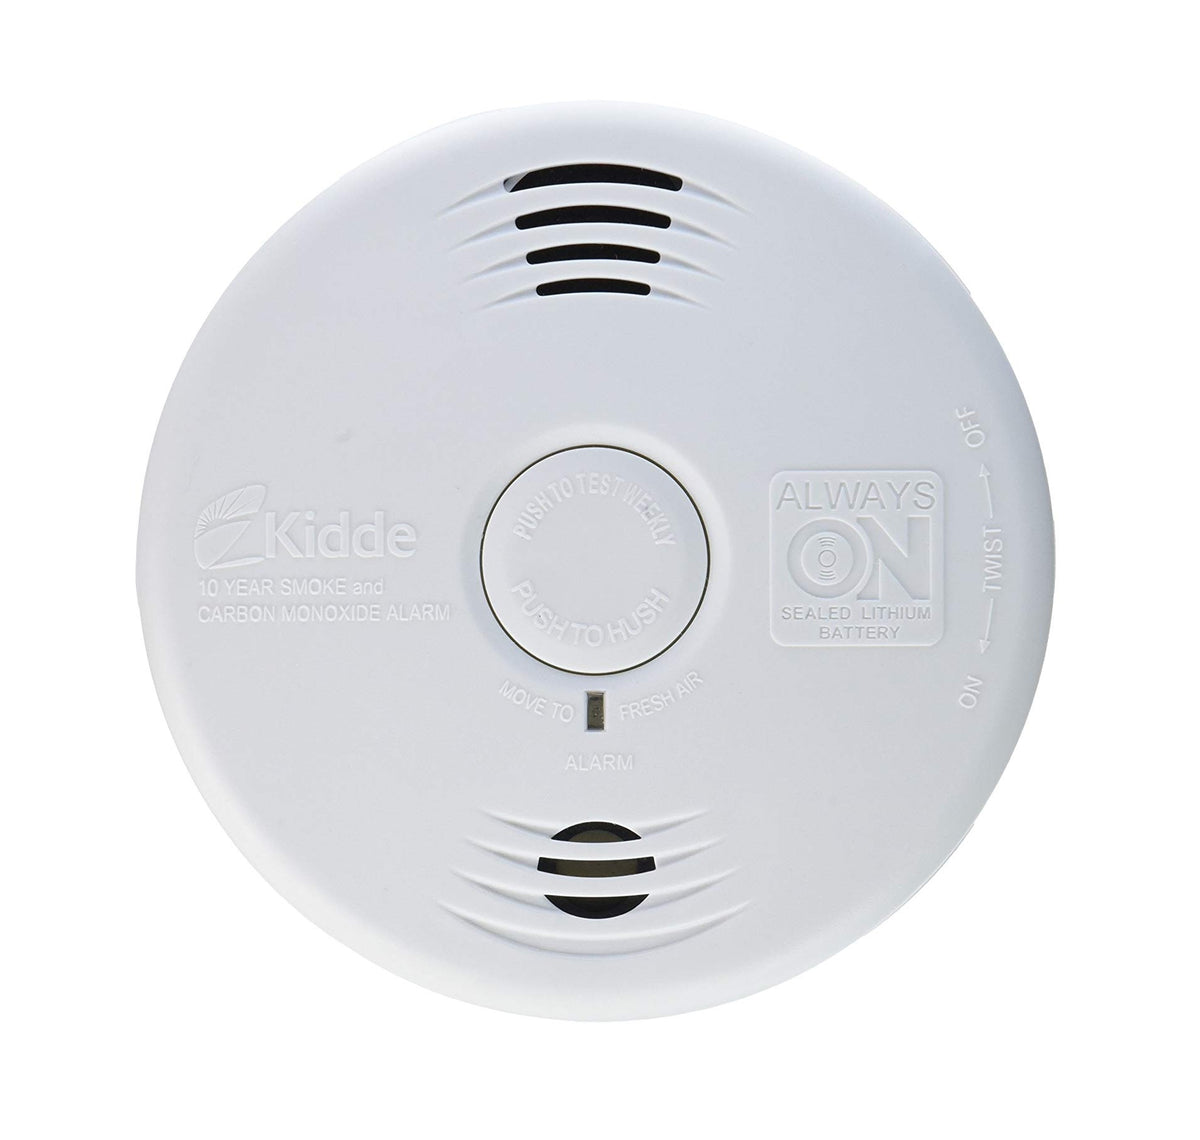 Kidde 21026065 Smoke and Carbon Monoxide Detector, White